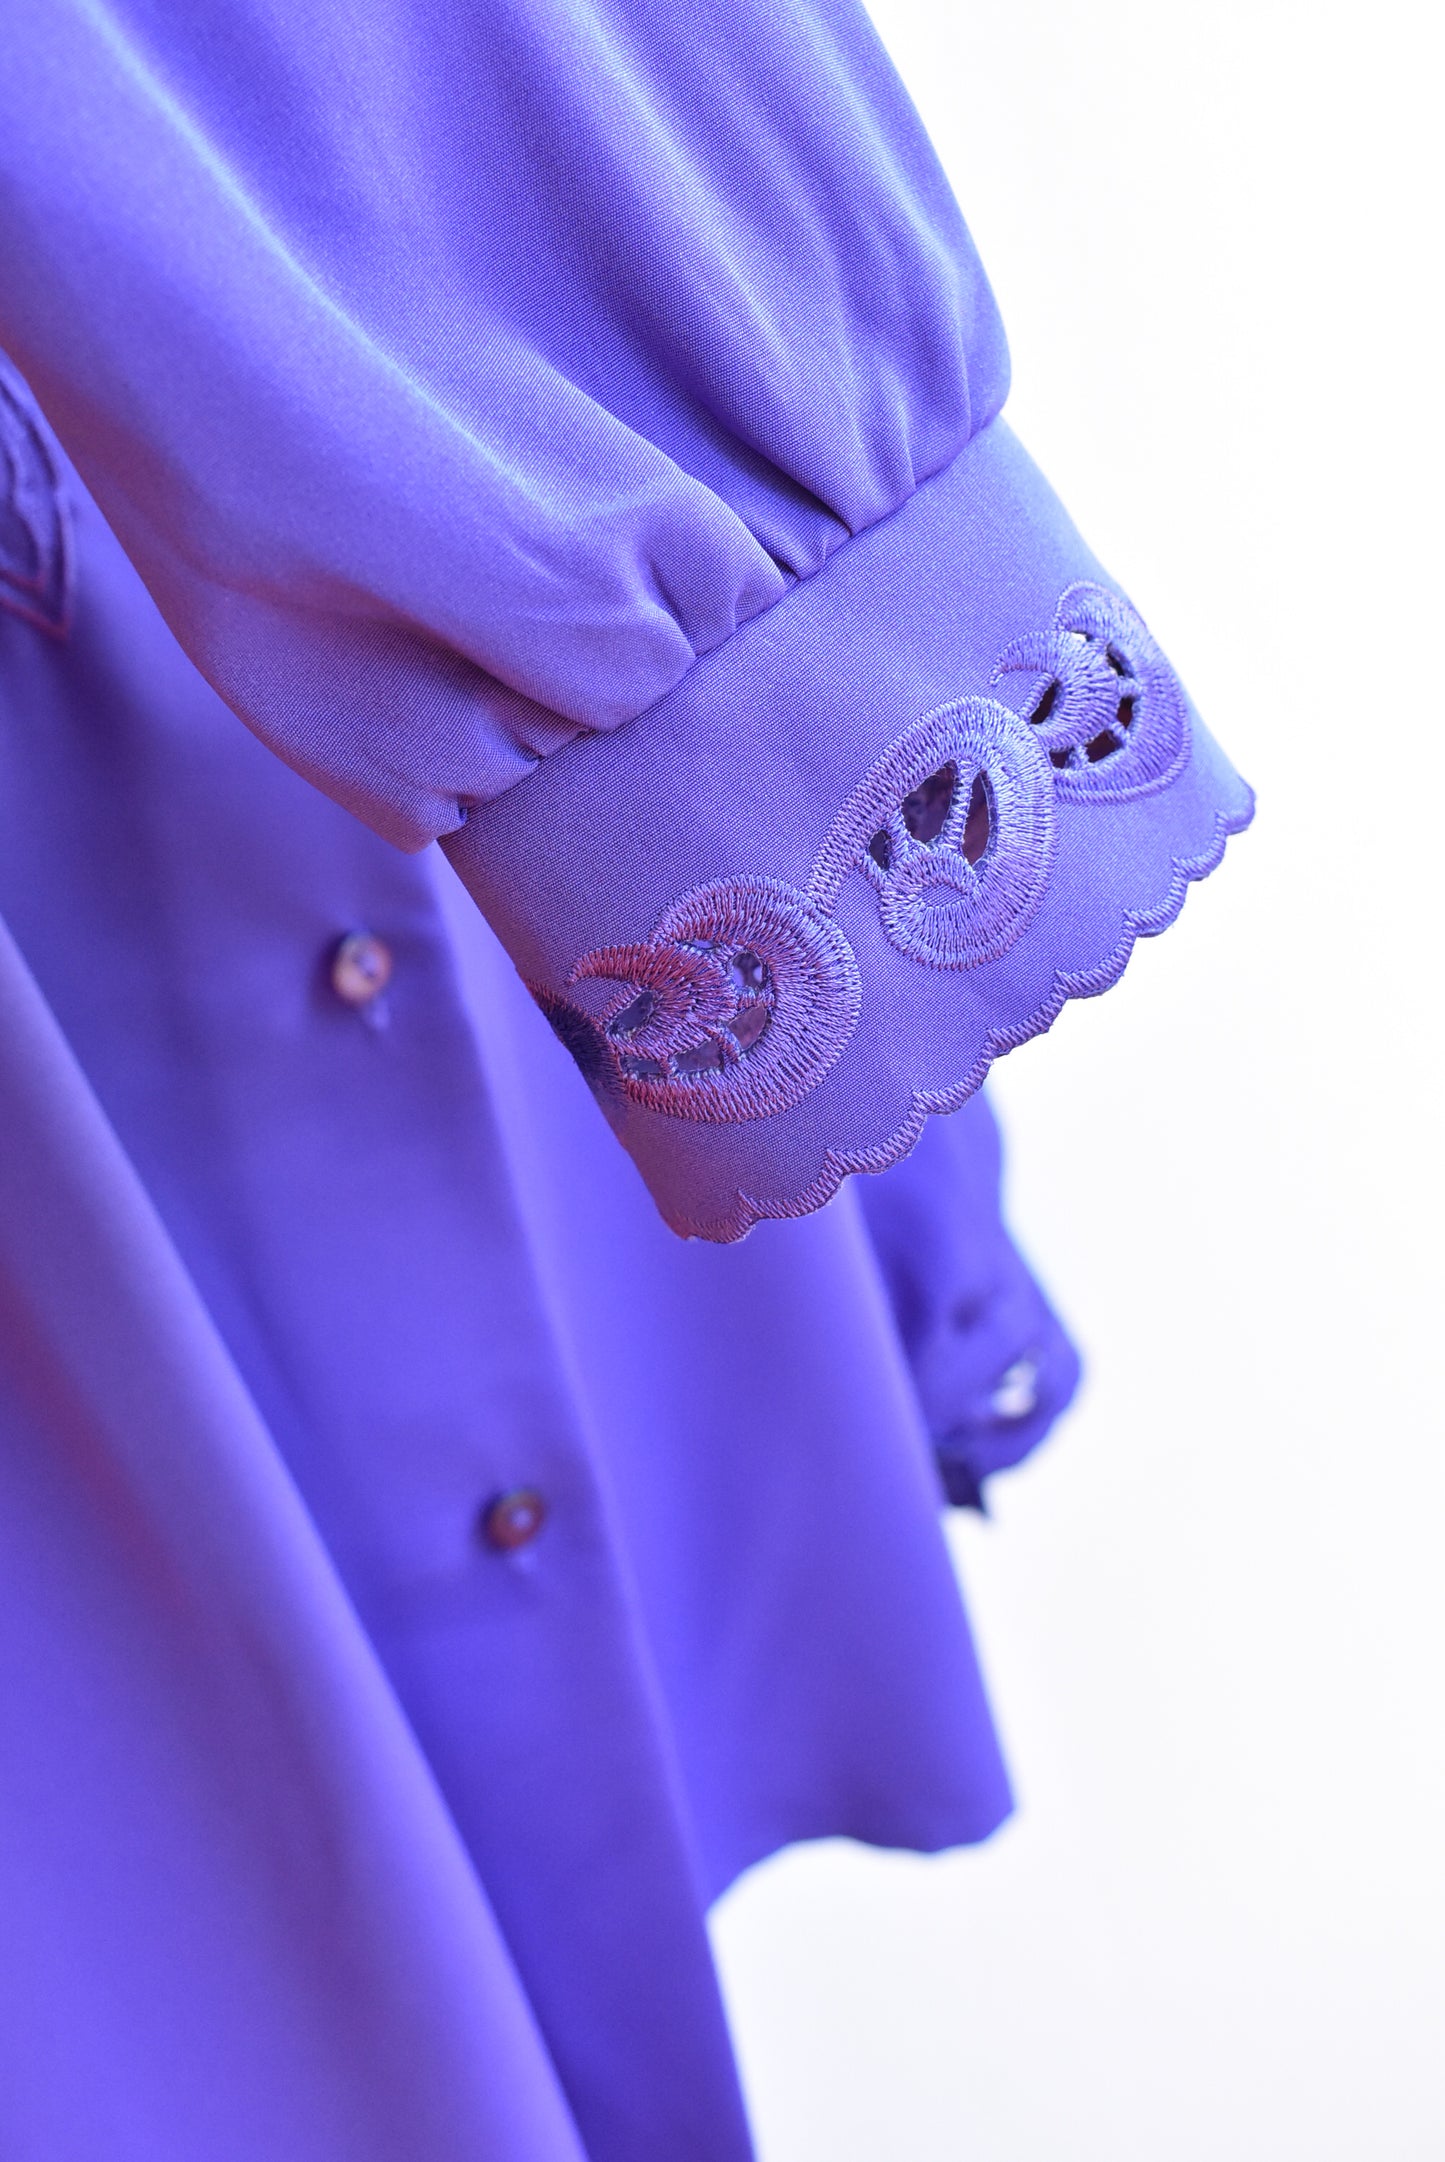 Retro purple embroidered blouse, size 15